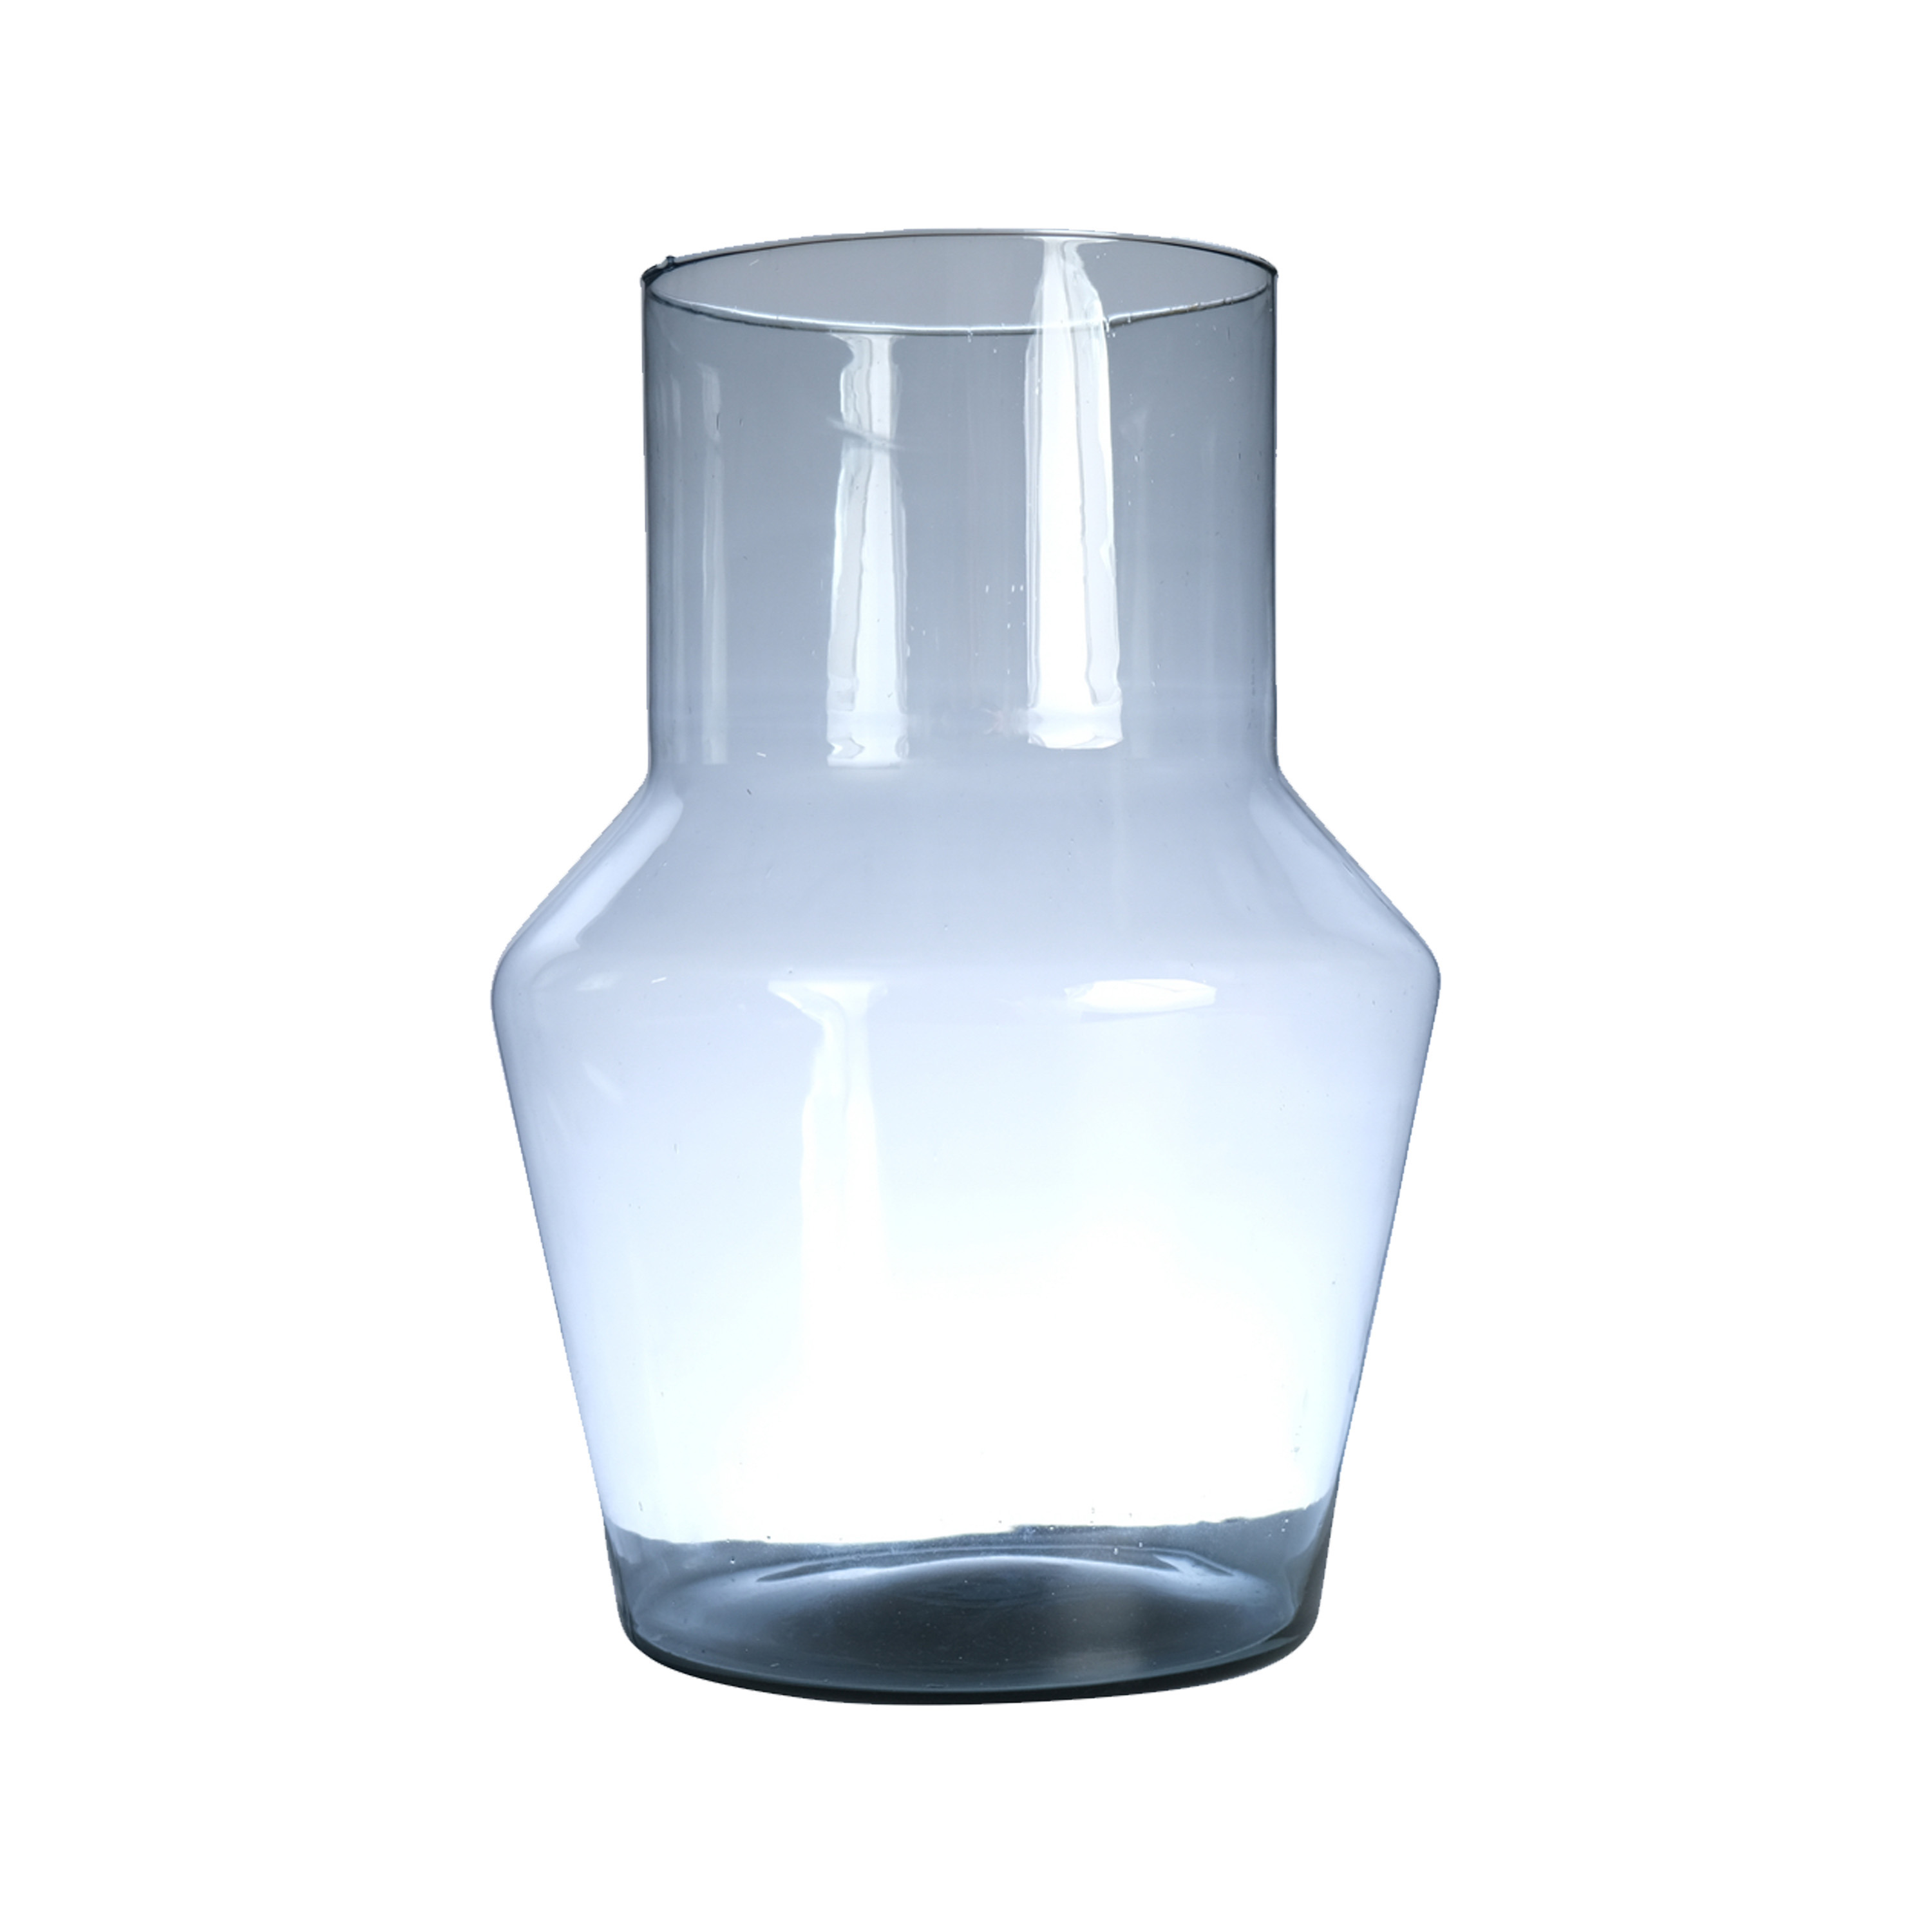 Hakbijl Glass Bloemenvaas Evie - transparant - eco glas - D28 x H40 cm - hoekige vaas -